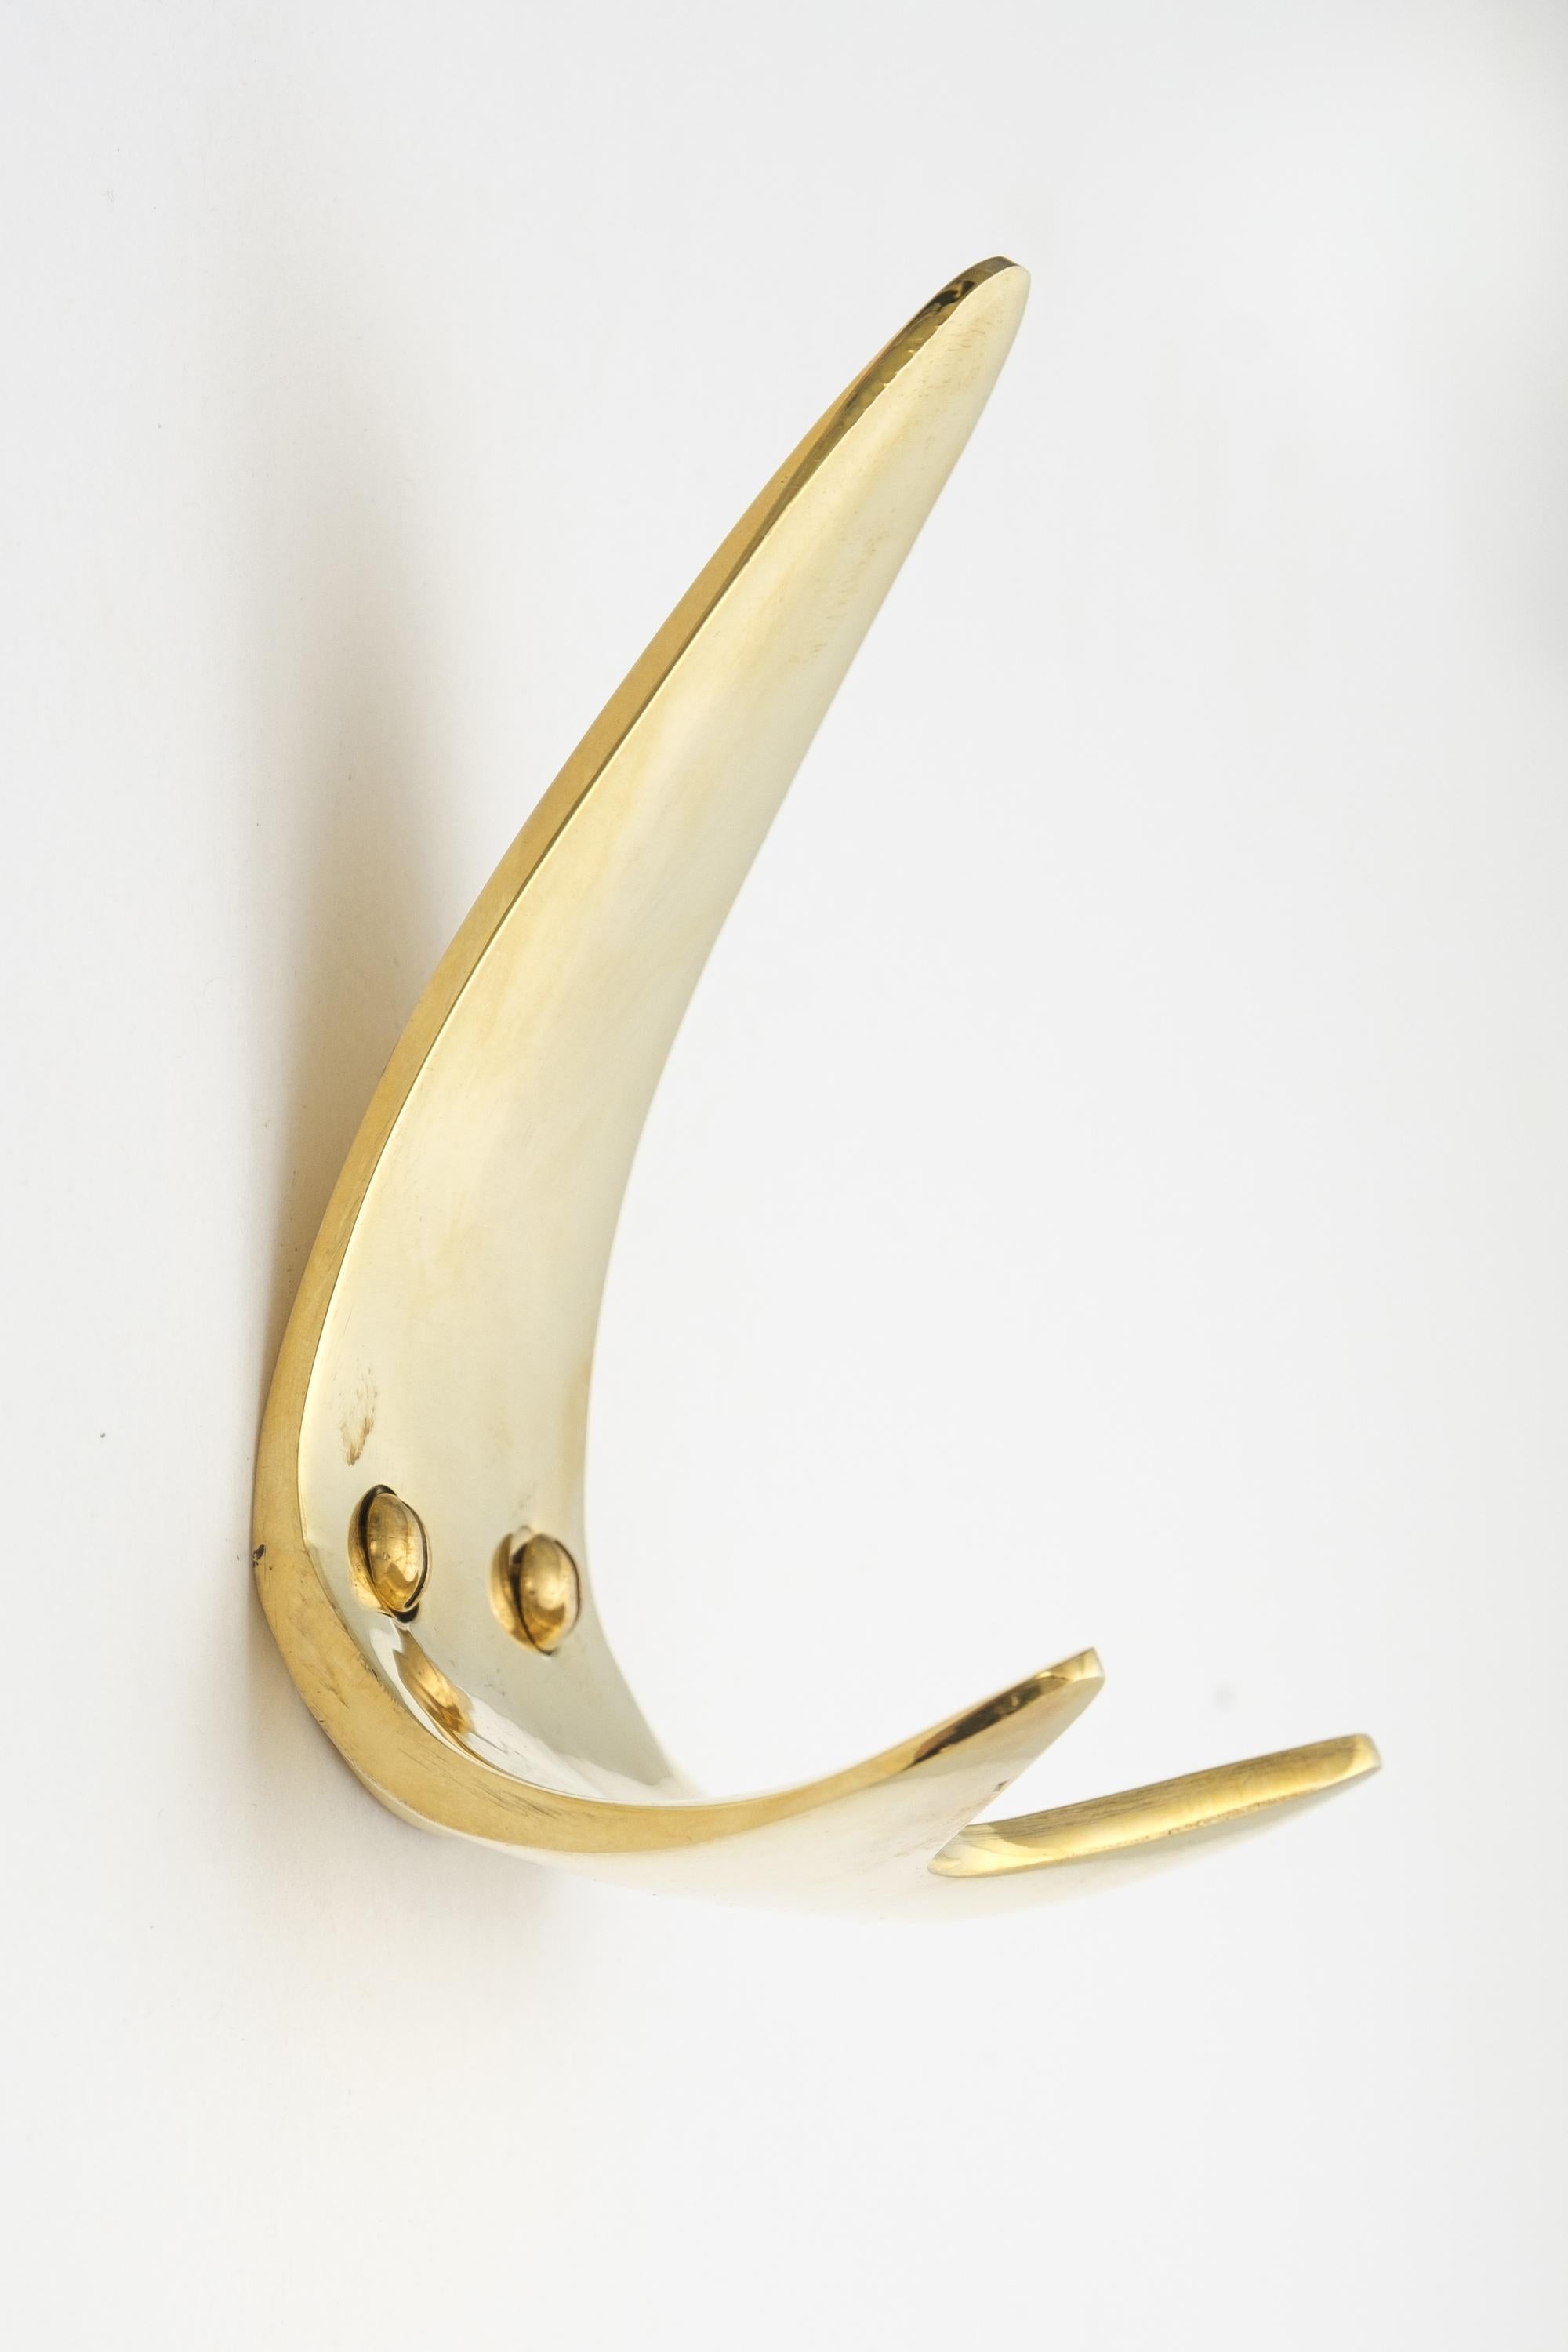 Carl Auböck Model #4086 Hook in Polished Brass For Sale 8